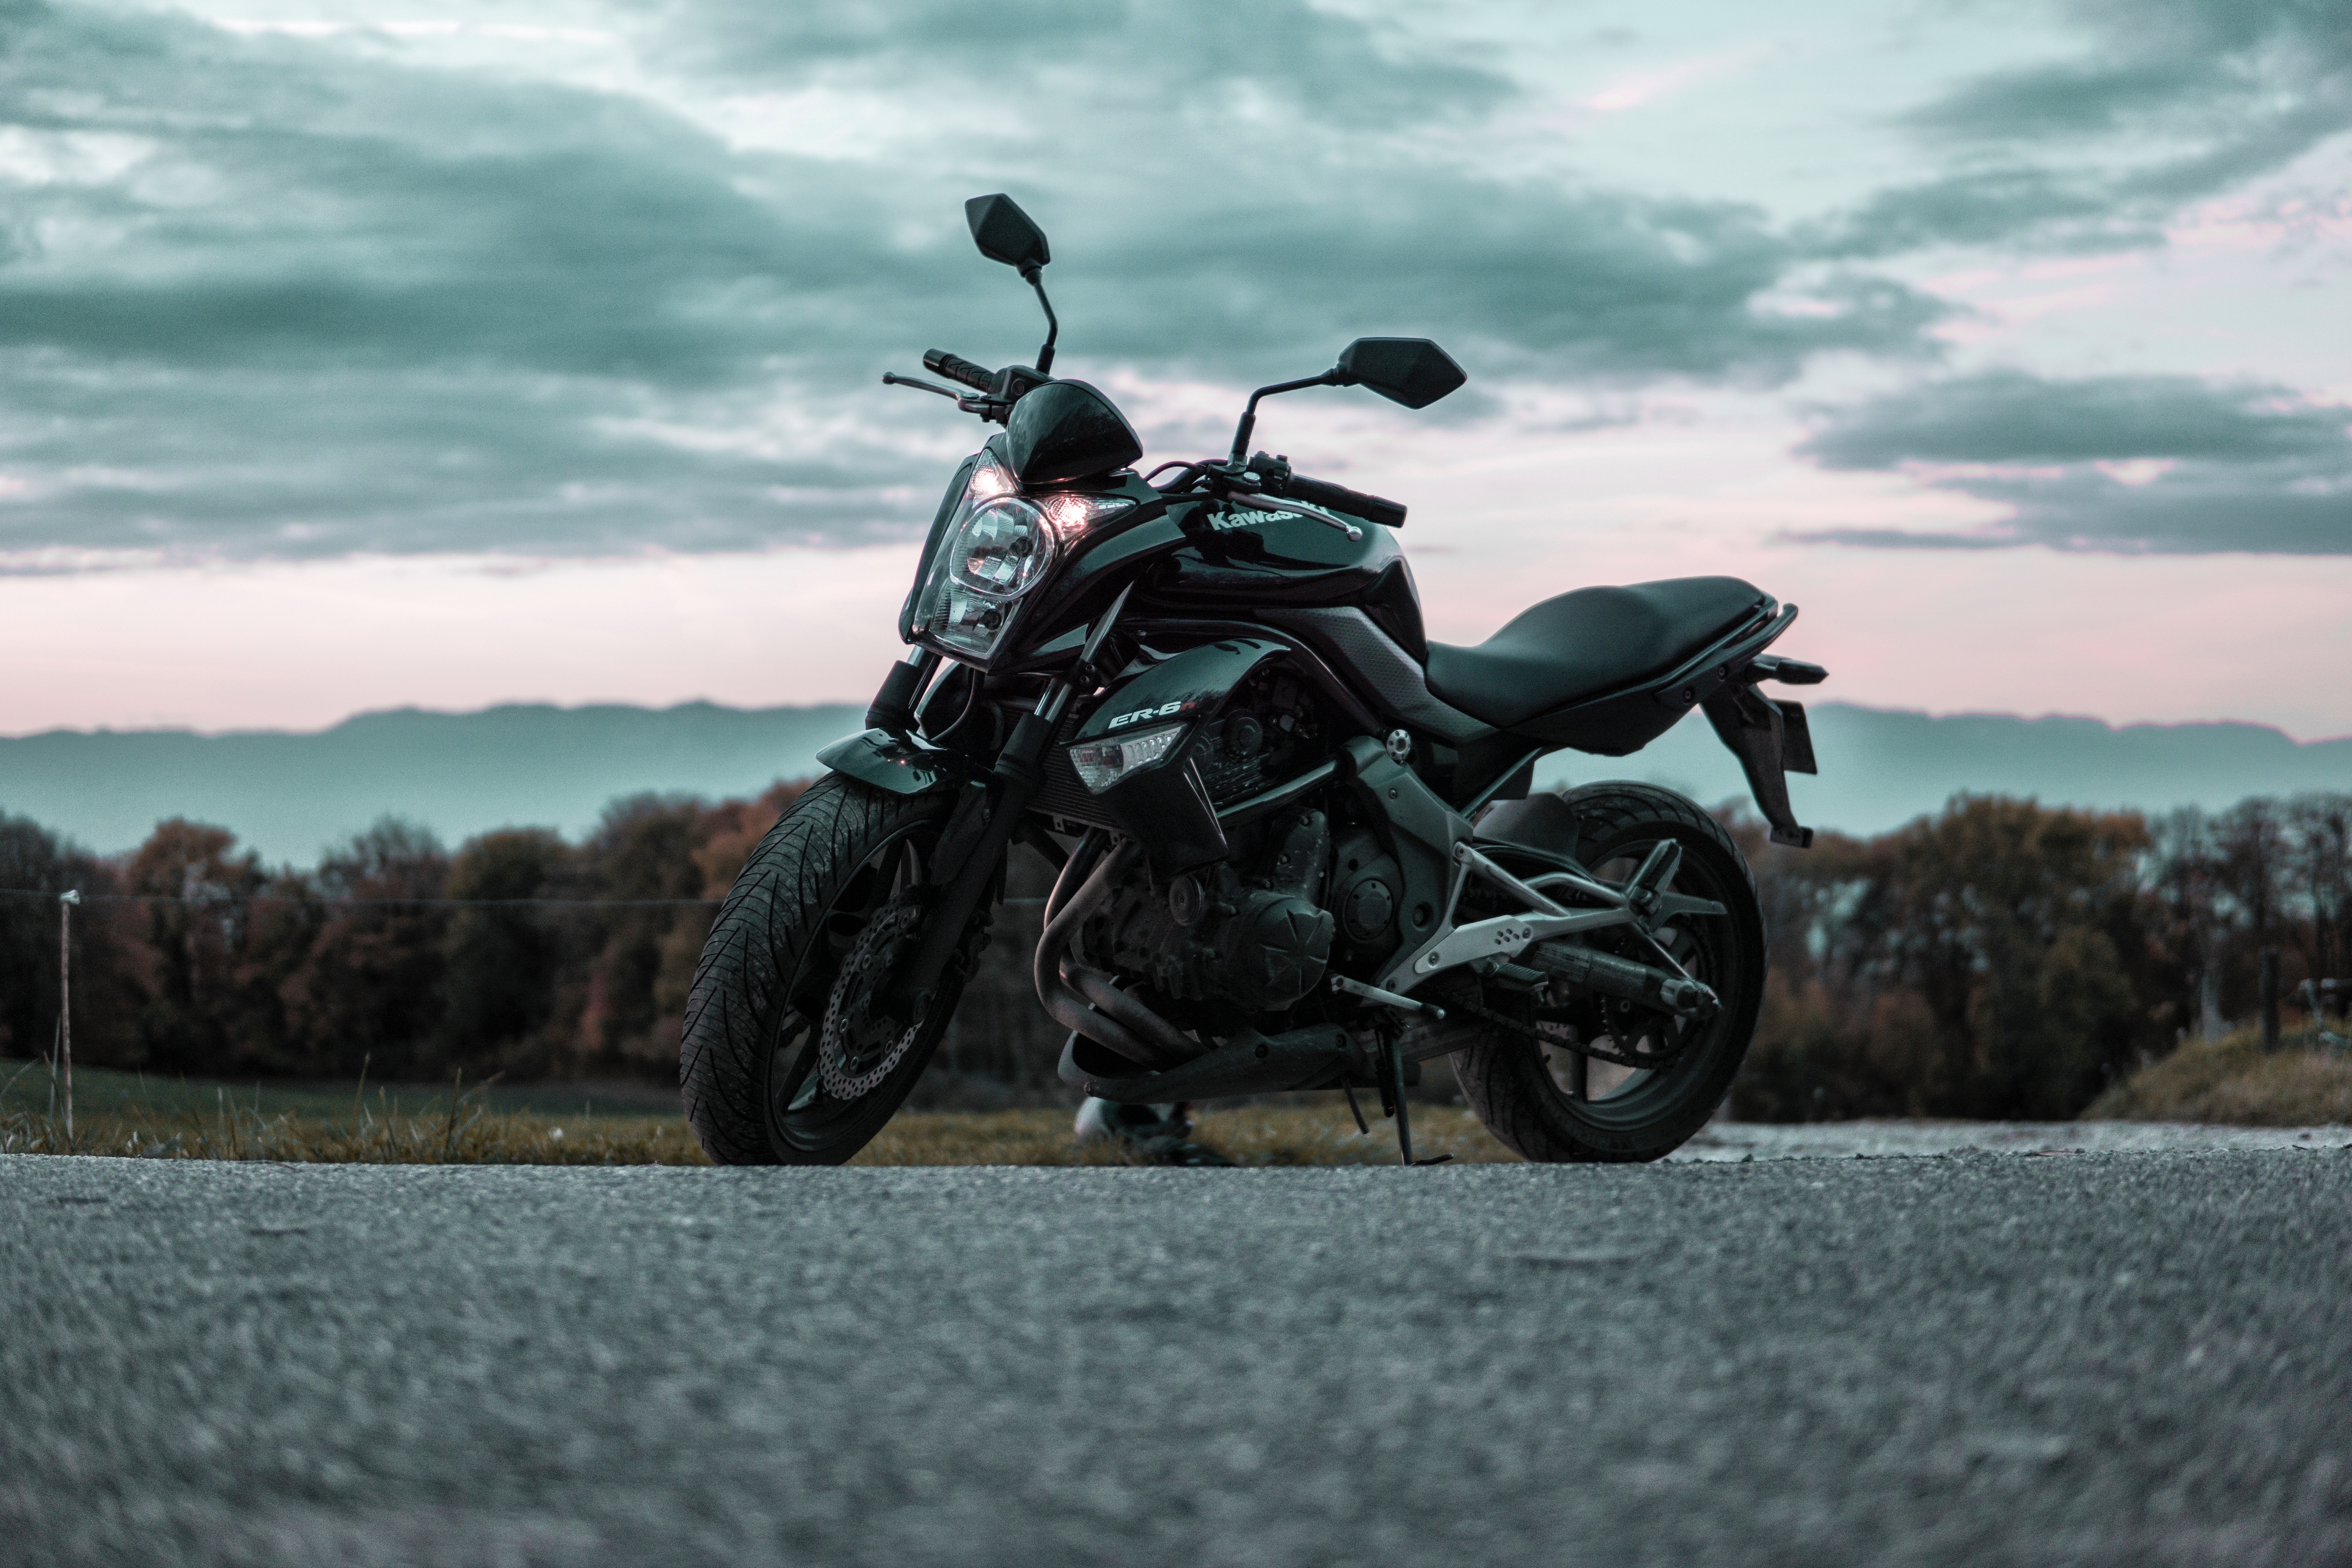 Download wallpaper 6000x4000 motorcycle, side view, road, asphalt hd  background